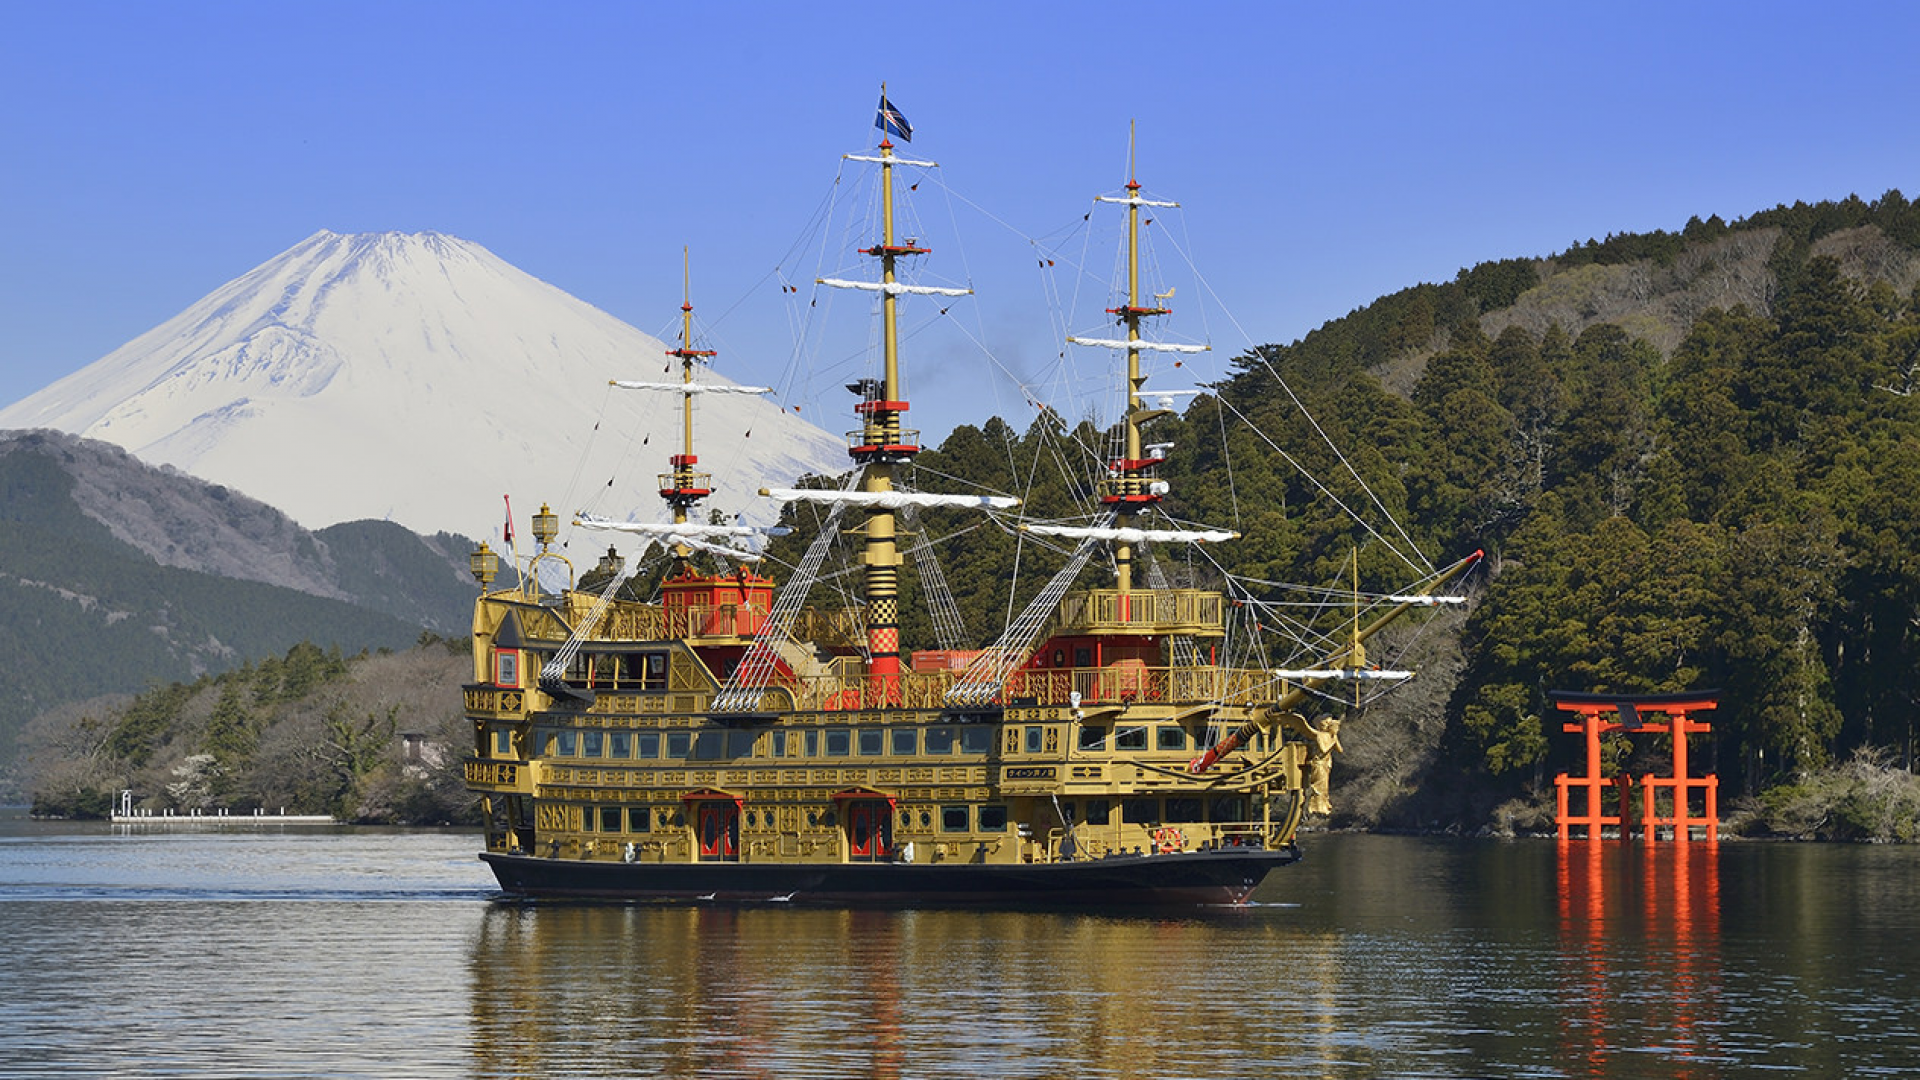 Thuyền cướp biển Hakone (Thuyền ngắm cảnh Hakone)